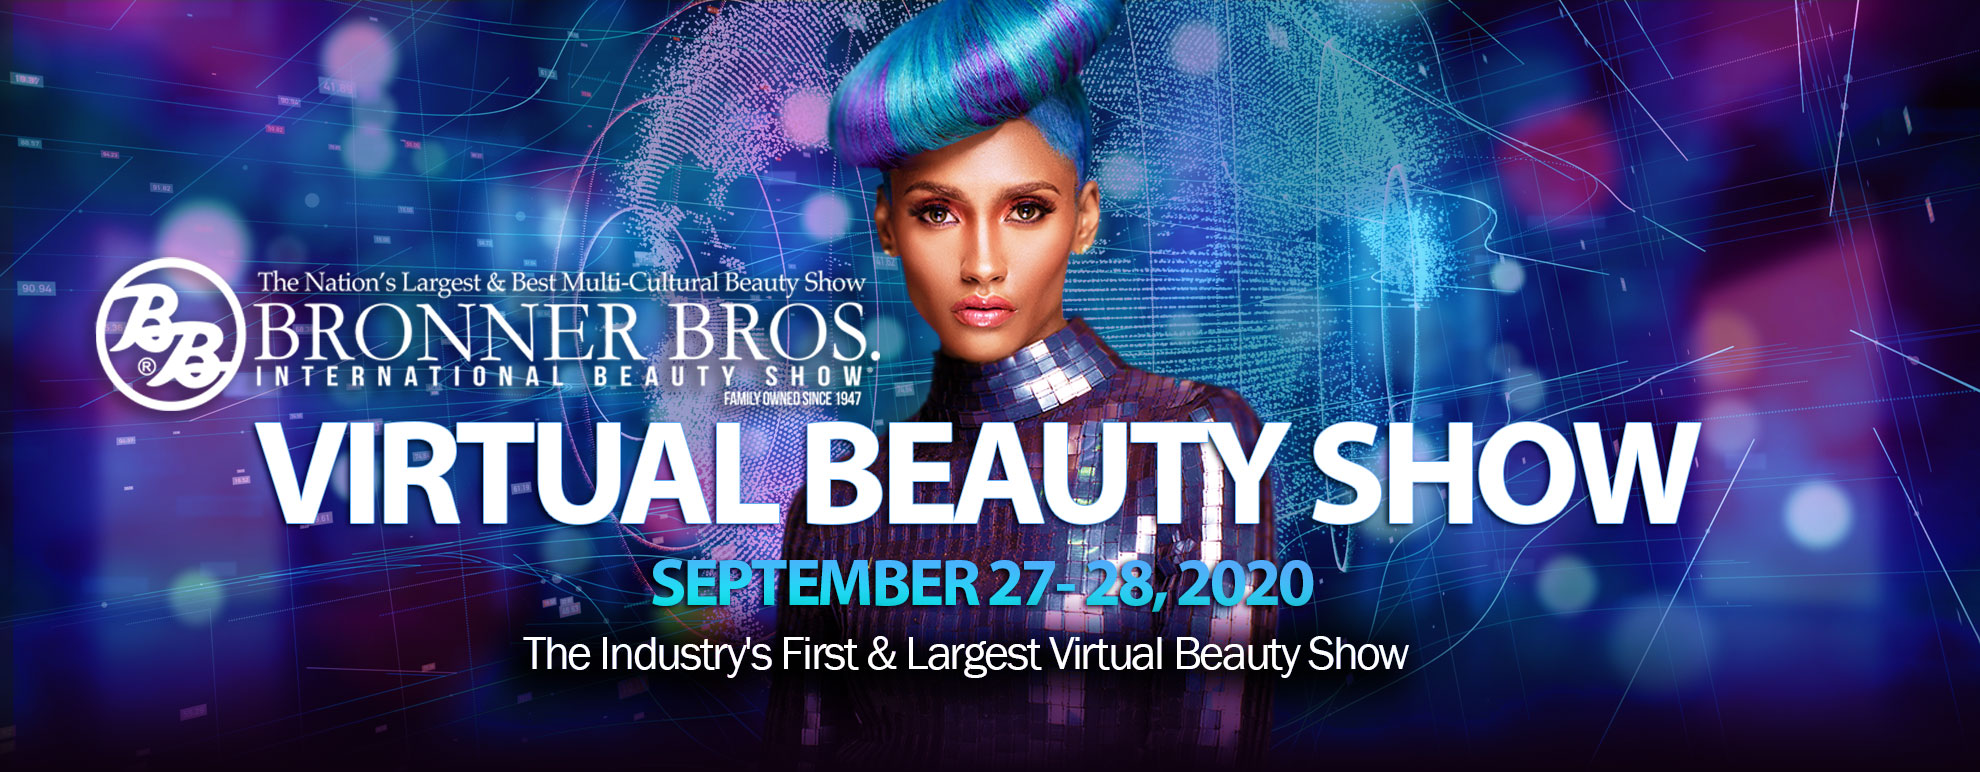 Bronner Bros. Virtual Beauty Show